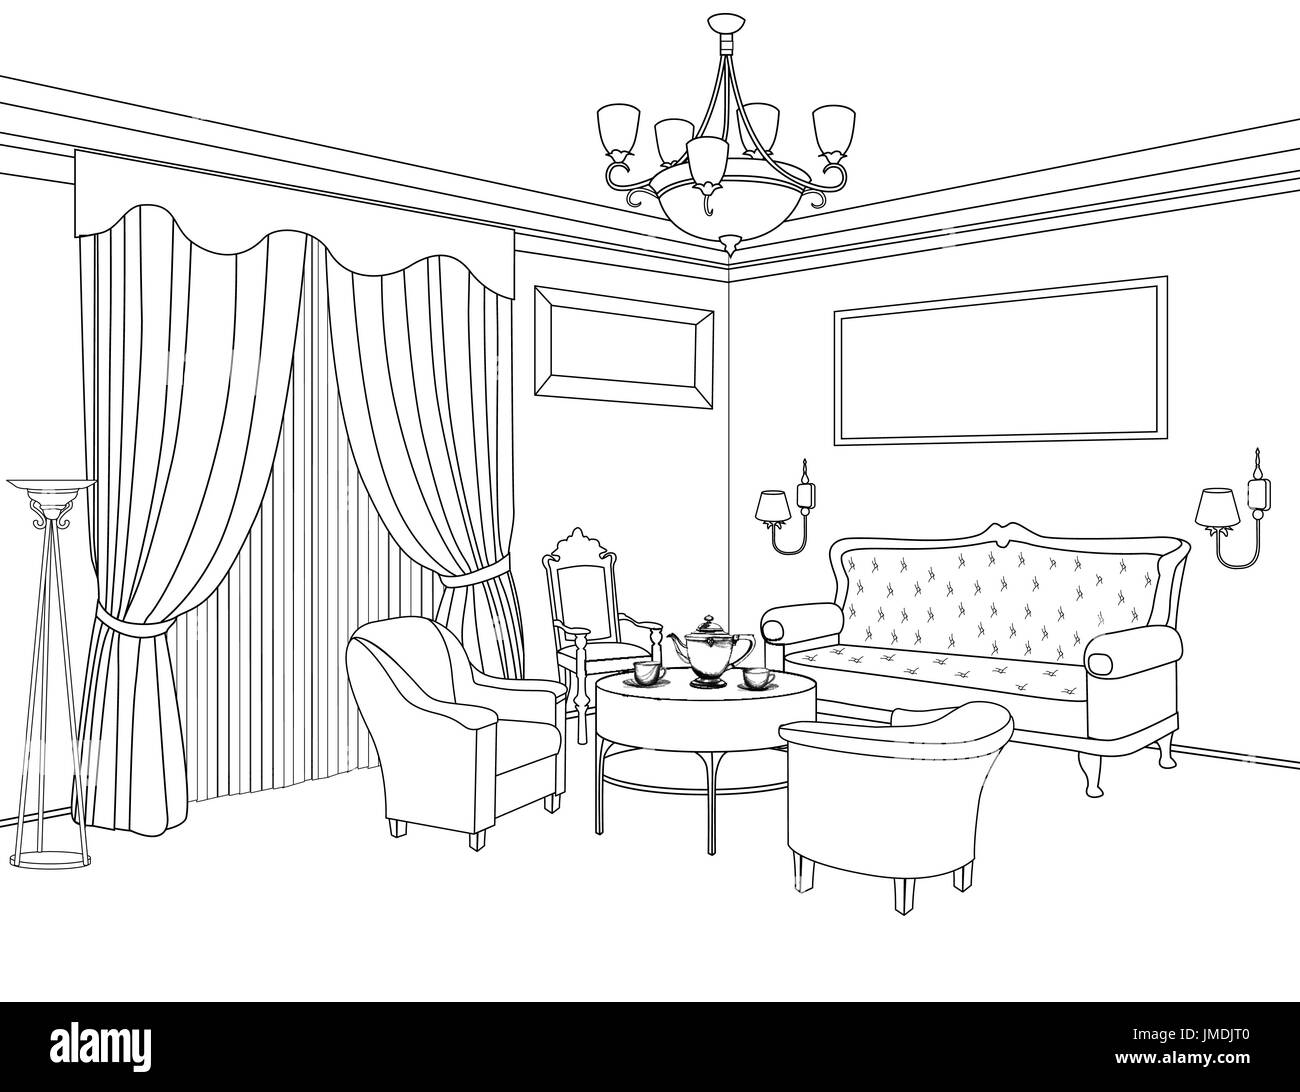 Interior outline sketch. Furniture blueprint. Architectural design. Living room Stock Photo